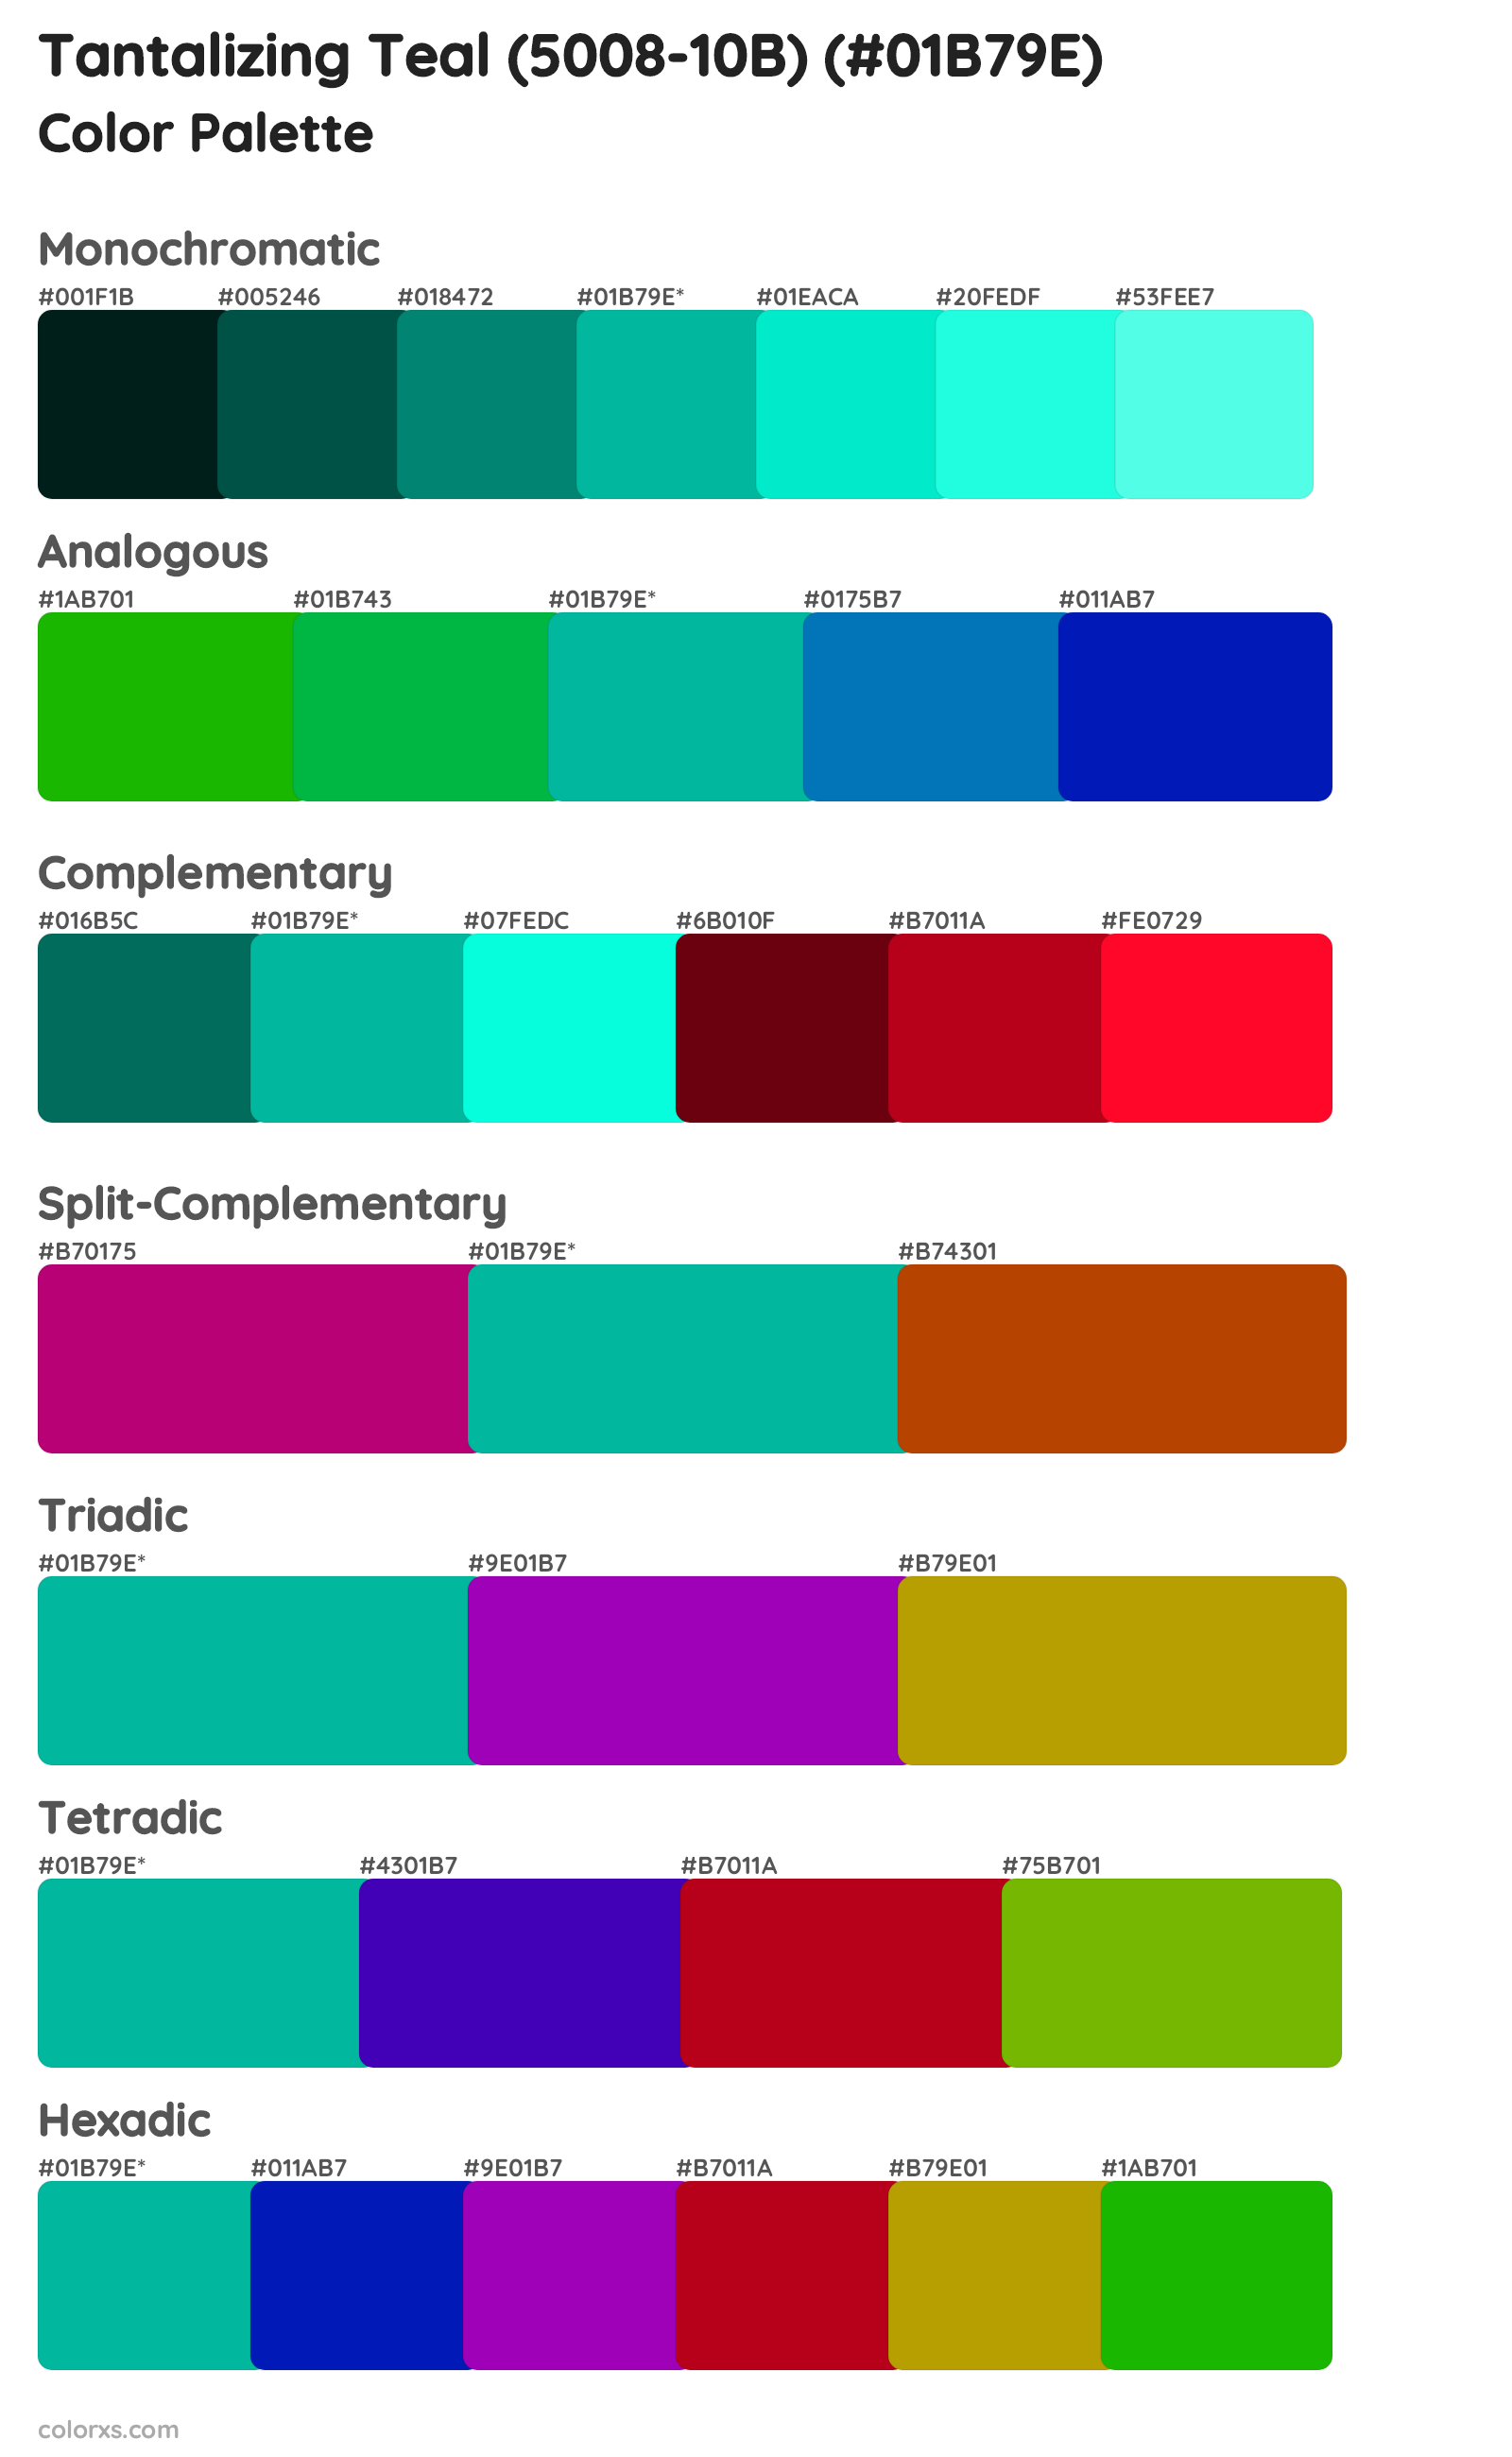 Tantalizing Teal (5008-10B) Color Scheme Palettes